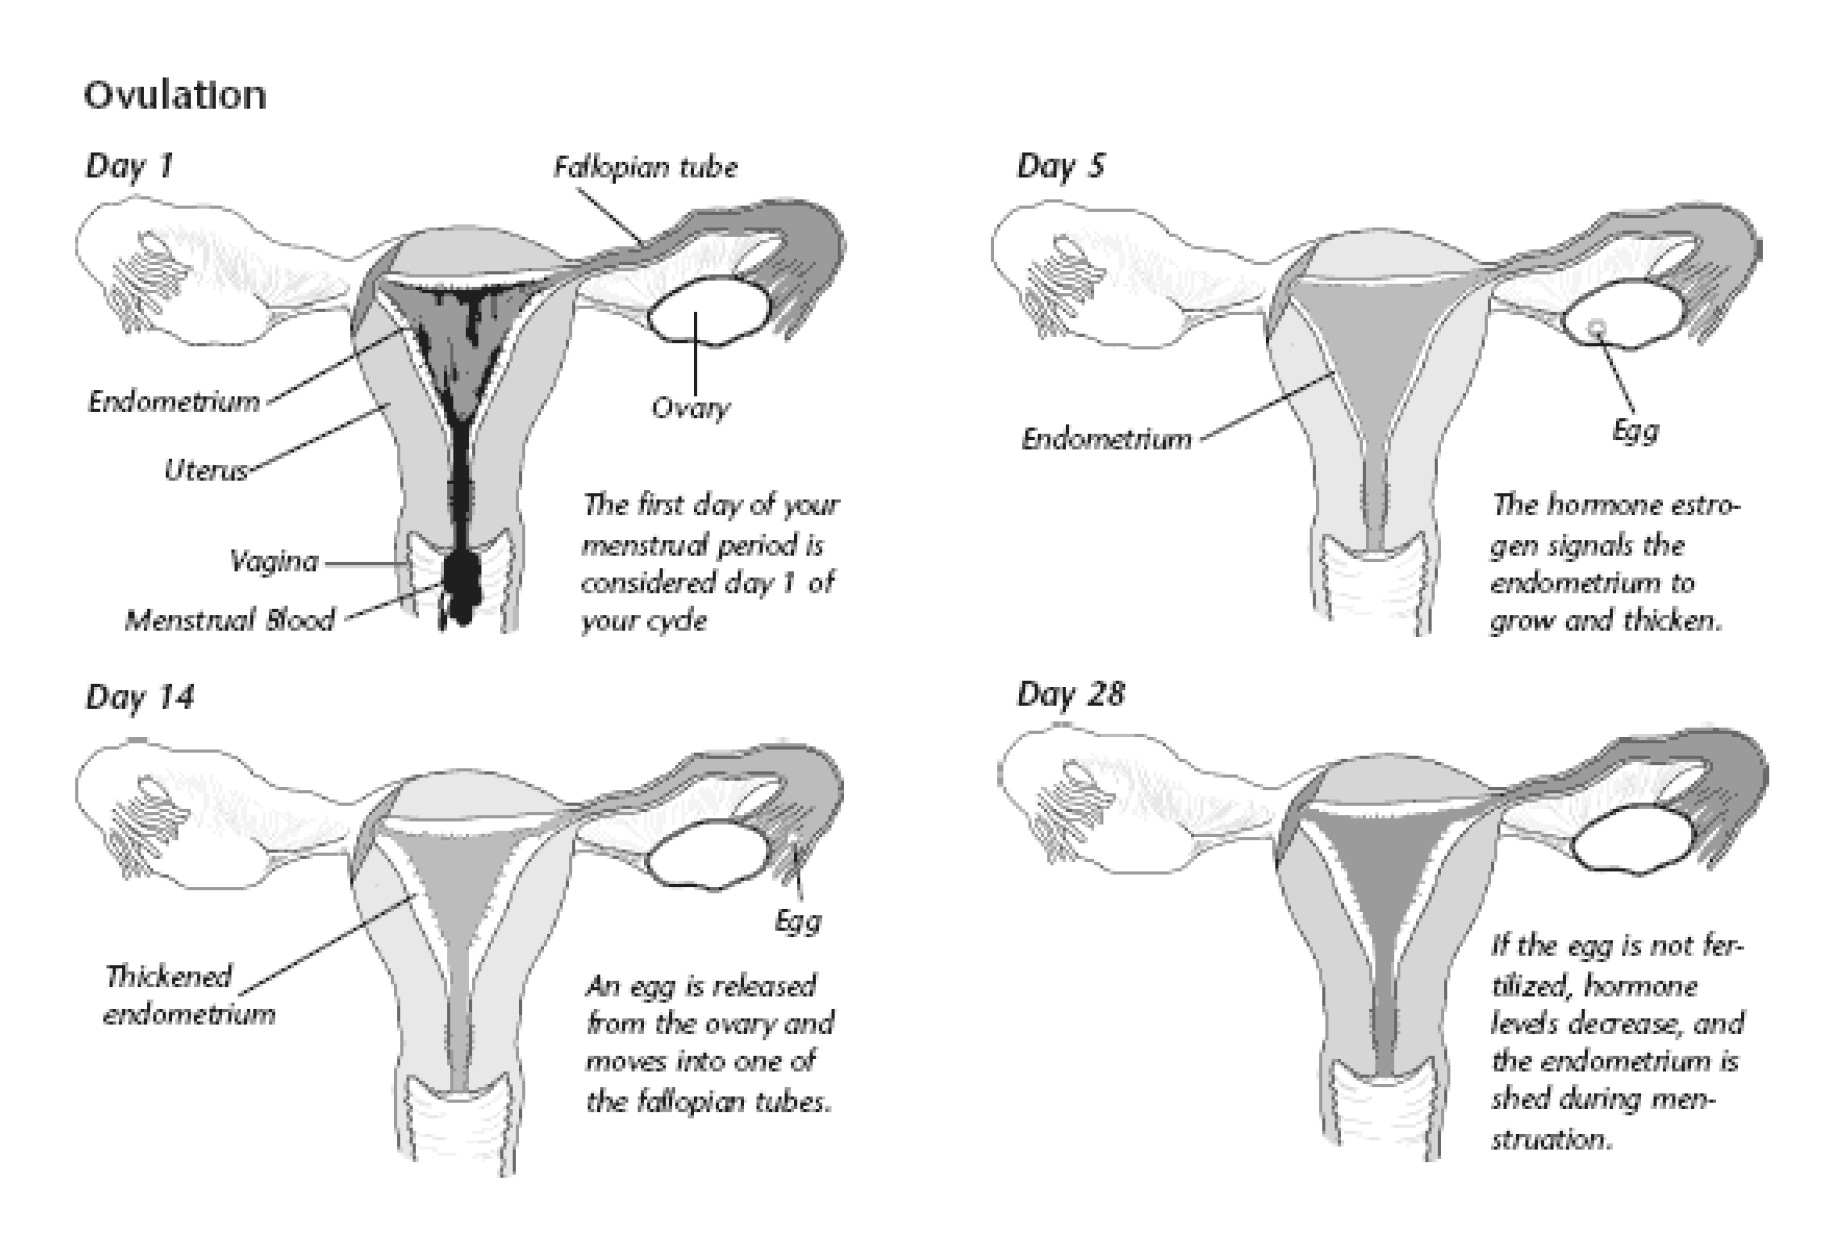 http://www.brendabarrymd.com/wp-content/uploads/2018/09/ovulation-cycle.jpg